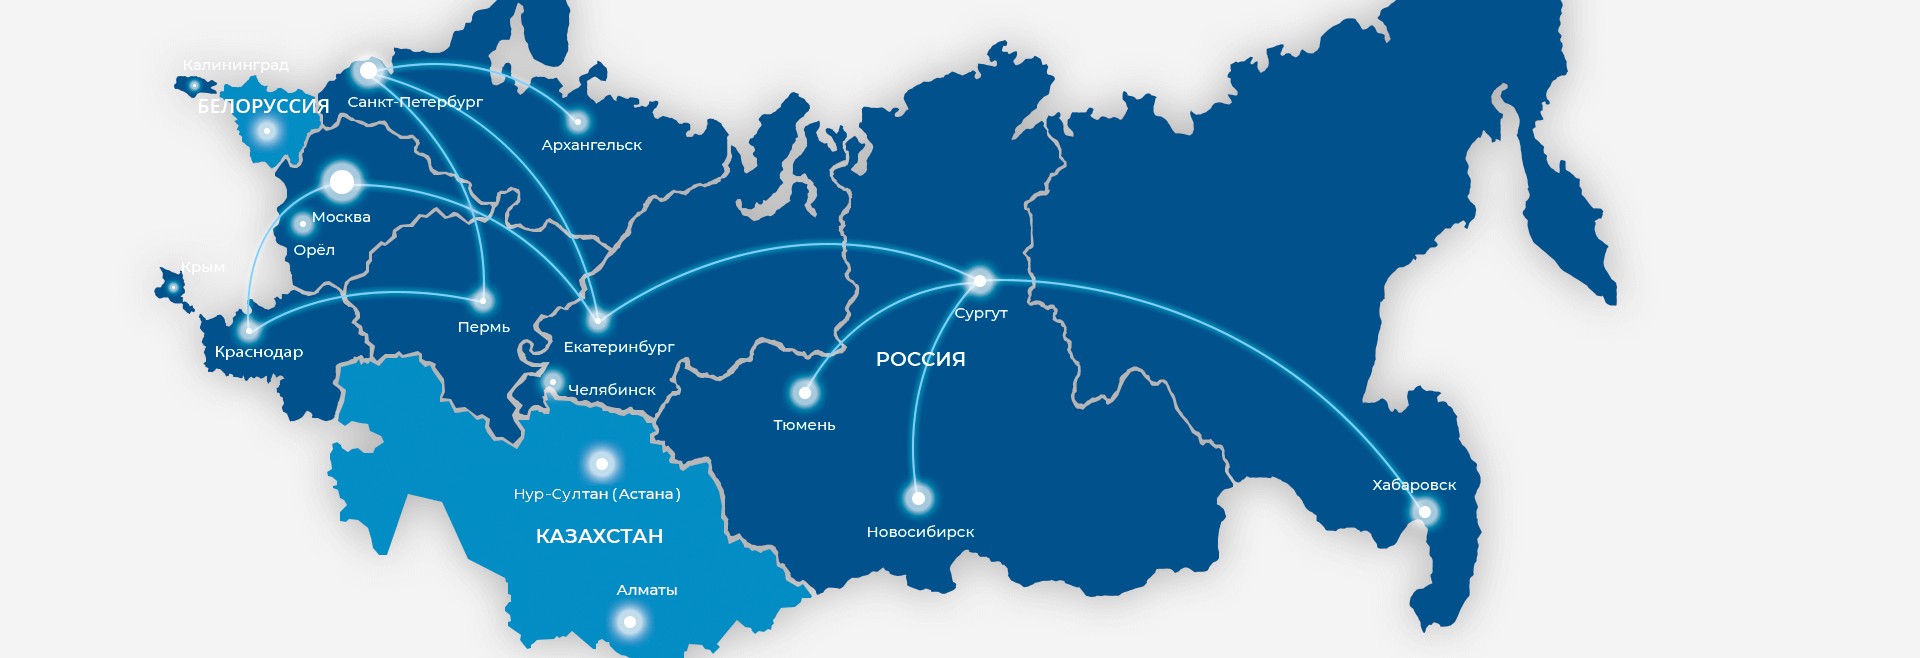 Network kazakhstan. География доставки. География поставок. География поставок Россия. Карта России.